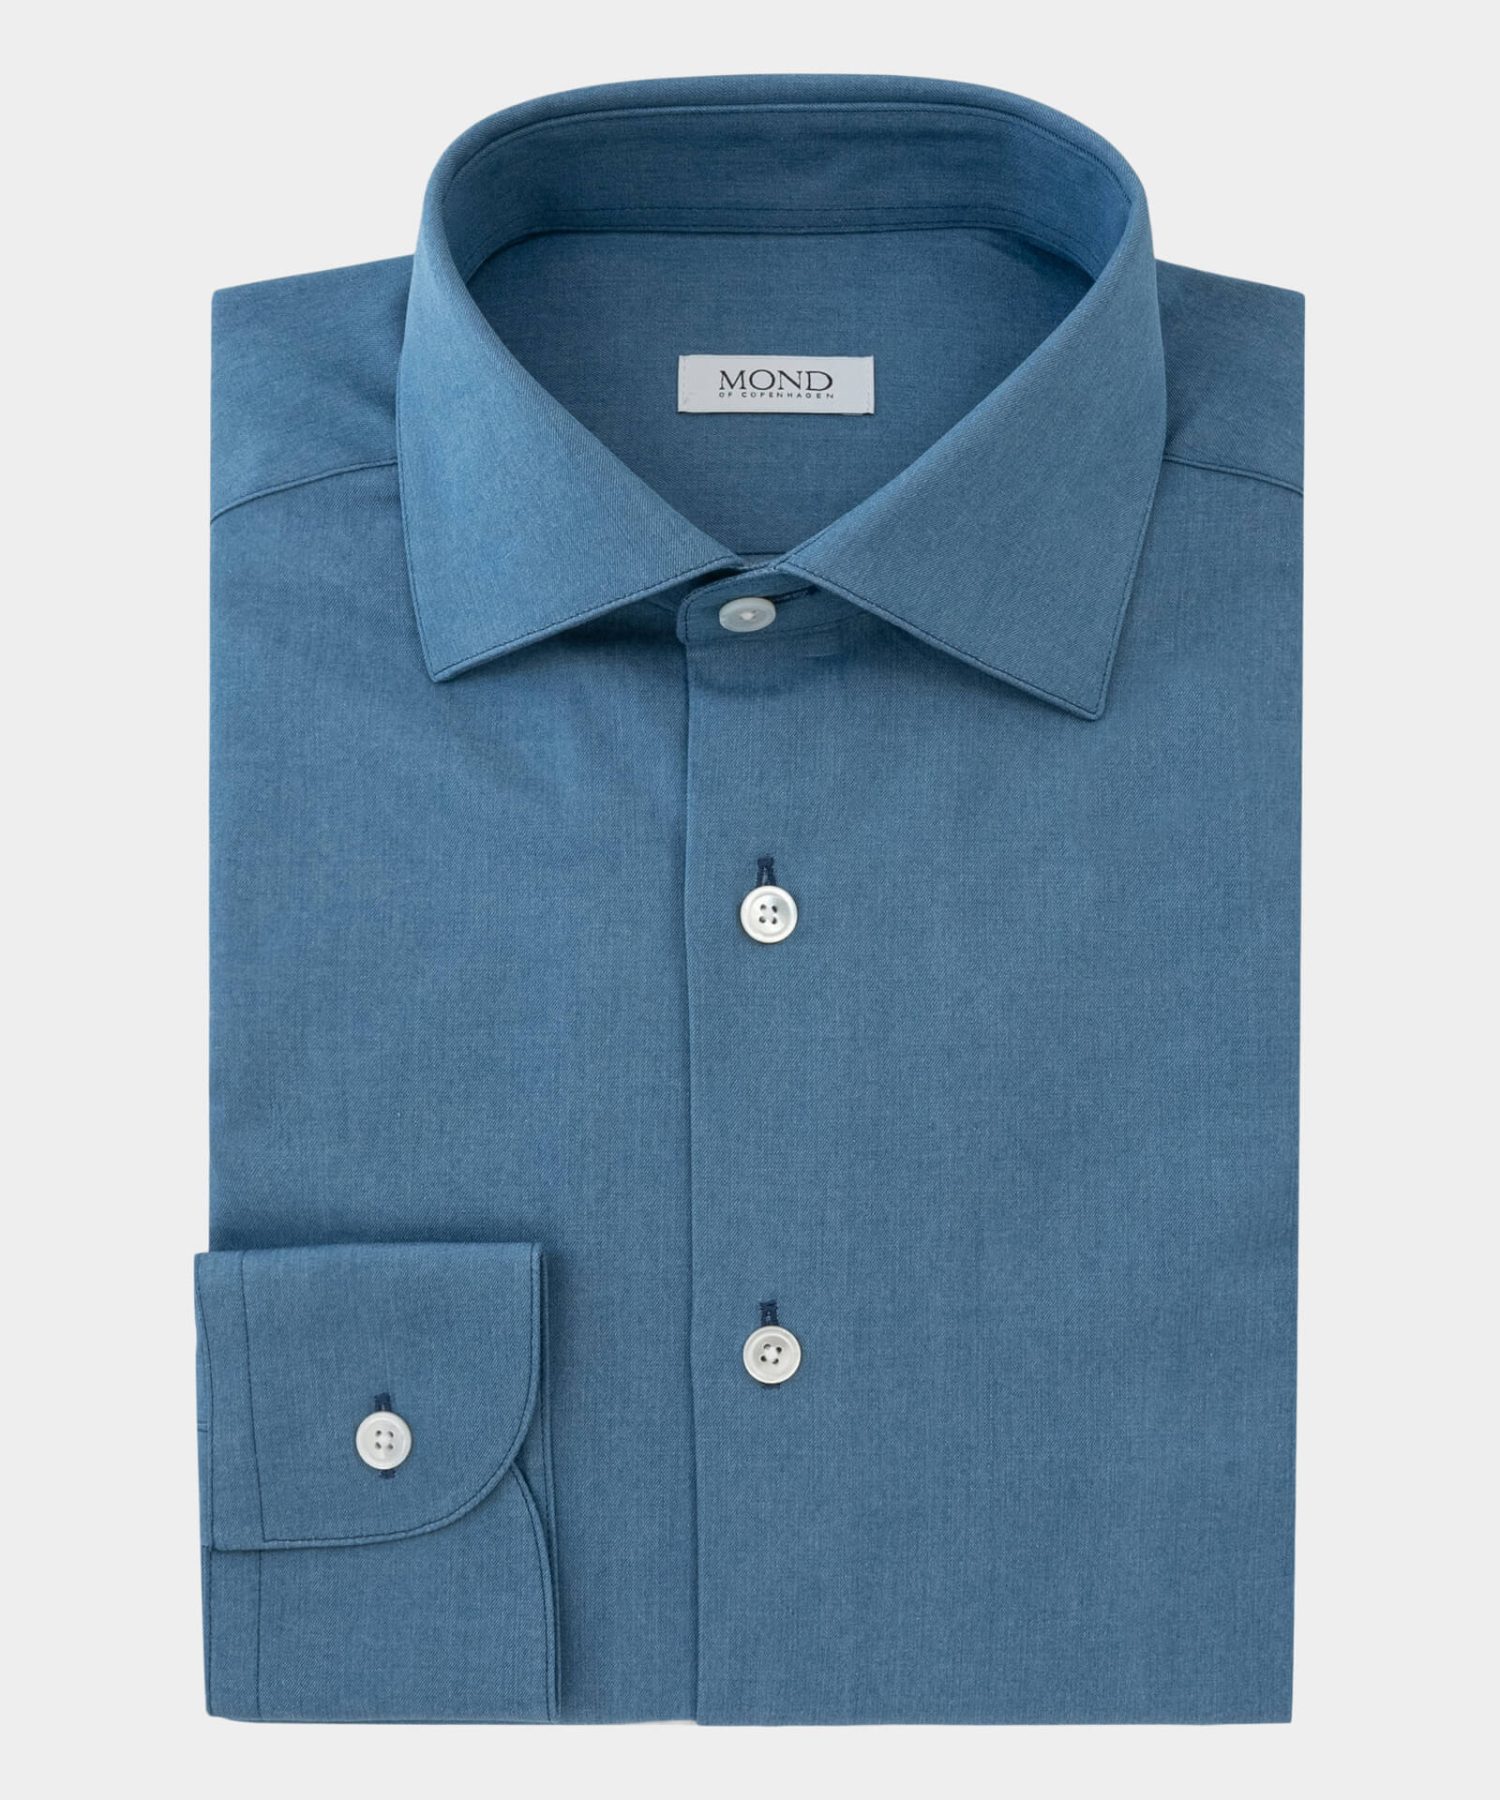 soft blue washed denim shirt